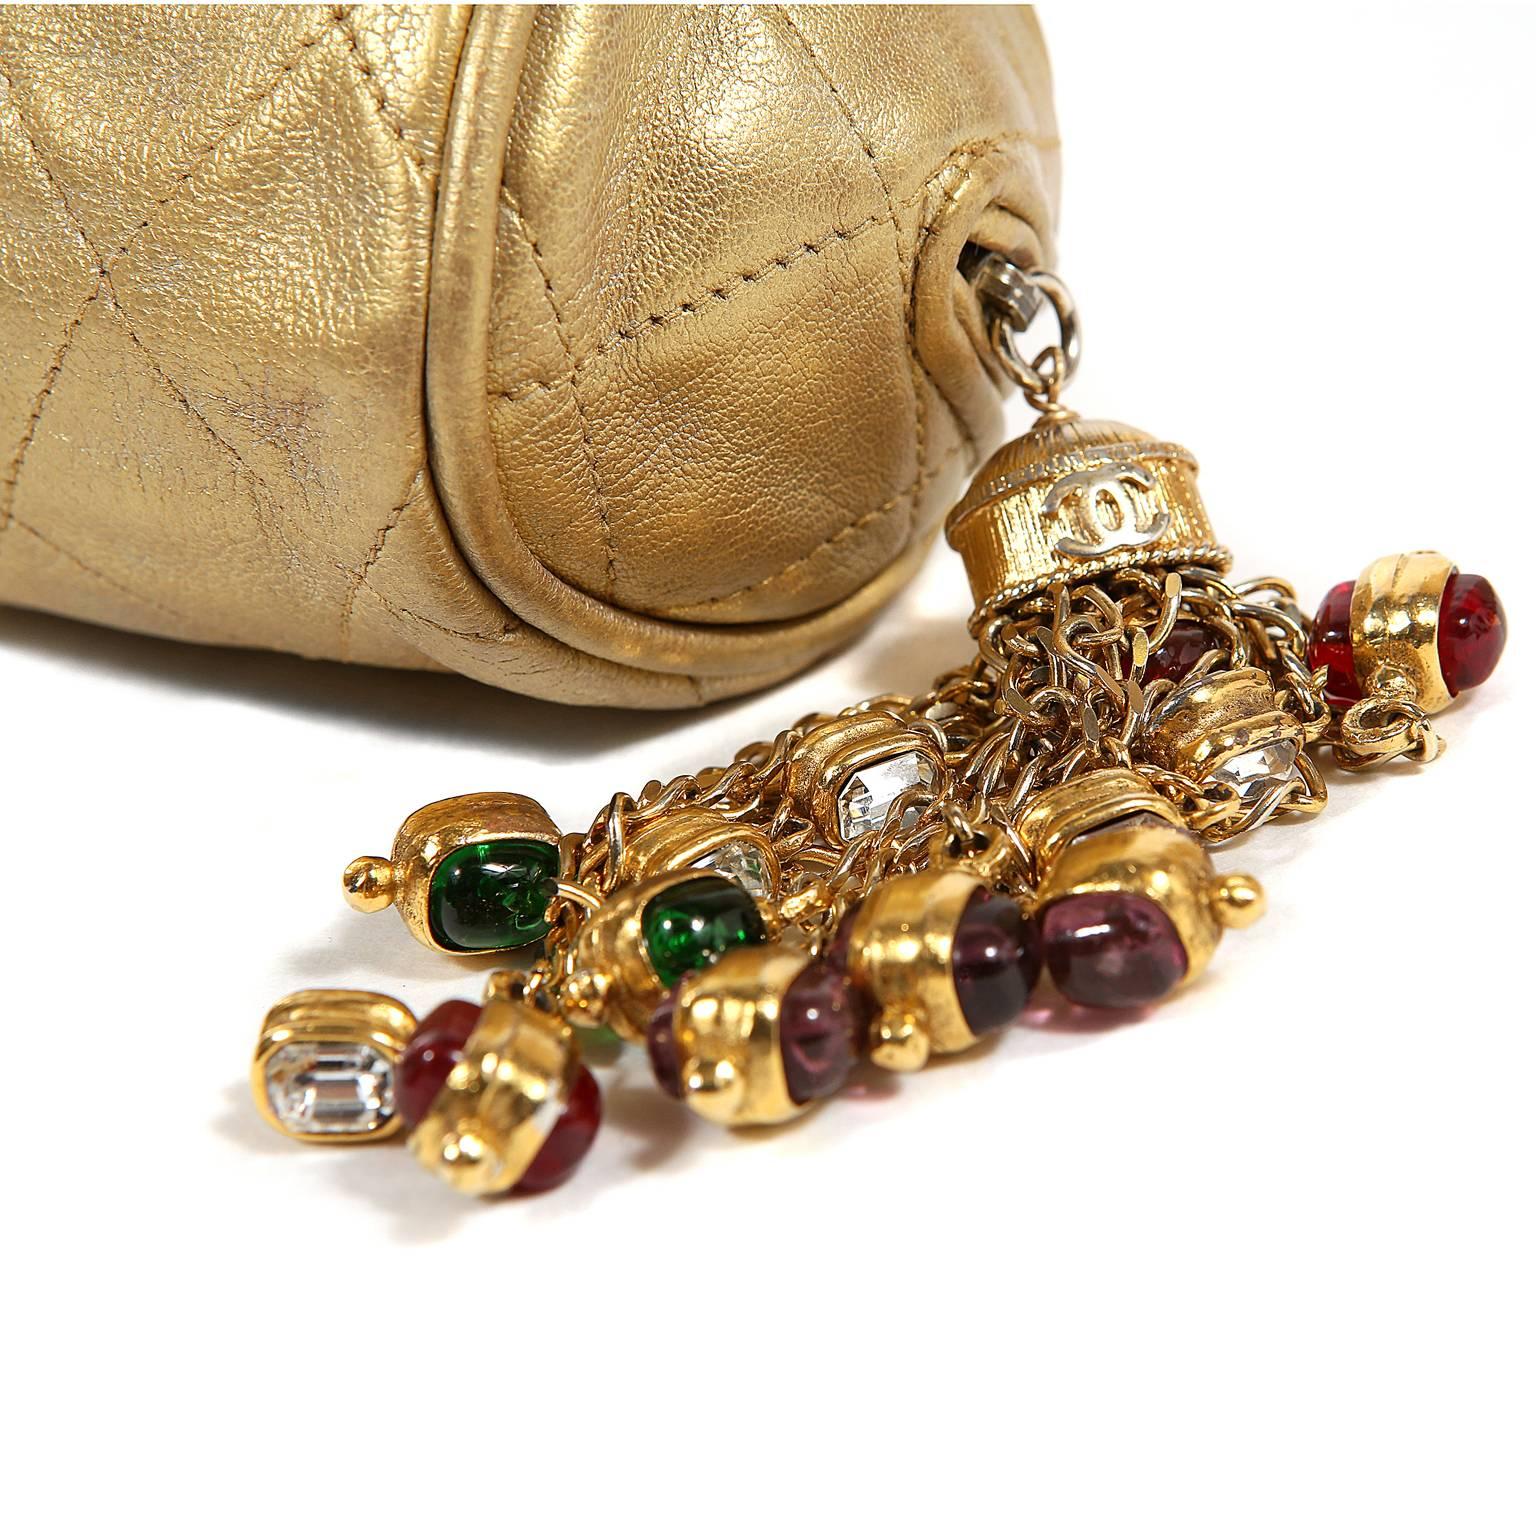 Women's Chanel Gold Leather Gripoix Tassel Evening Bag